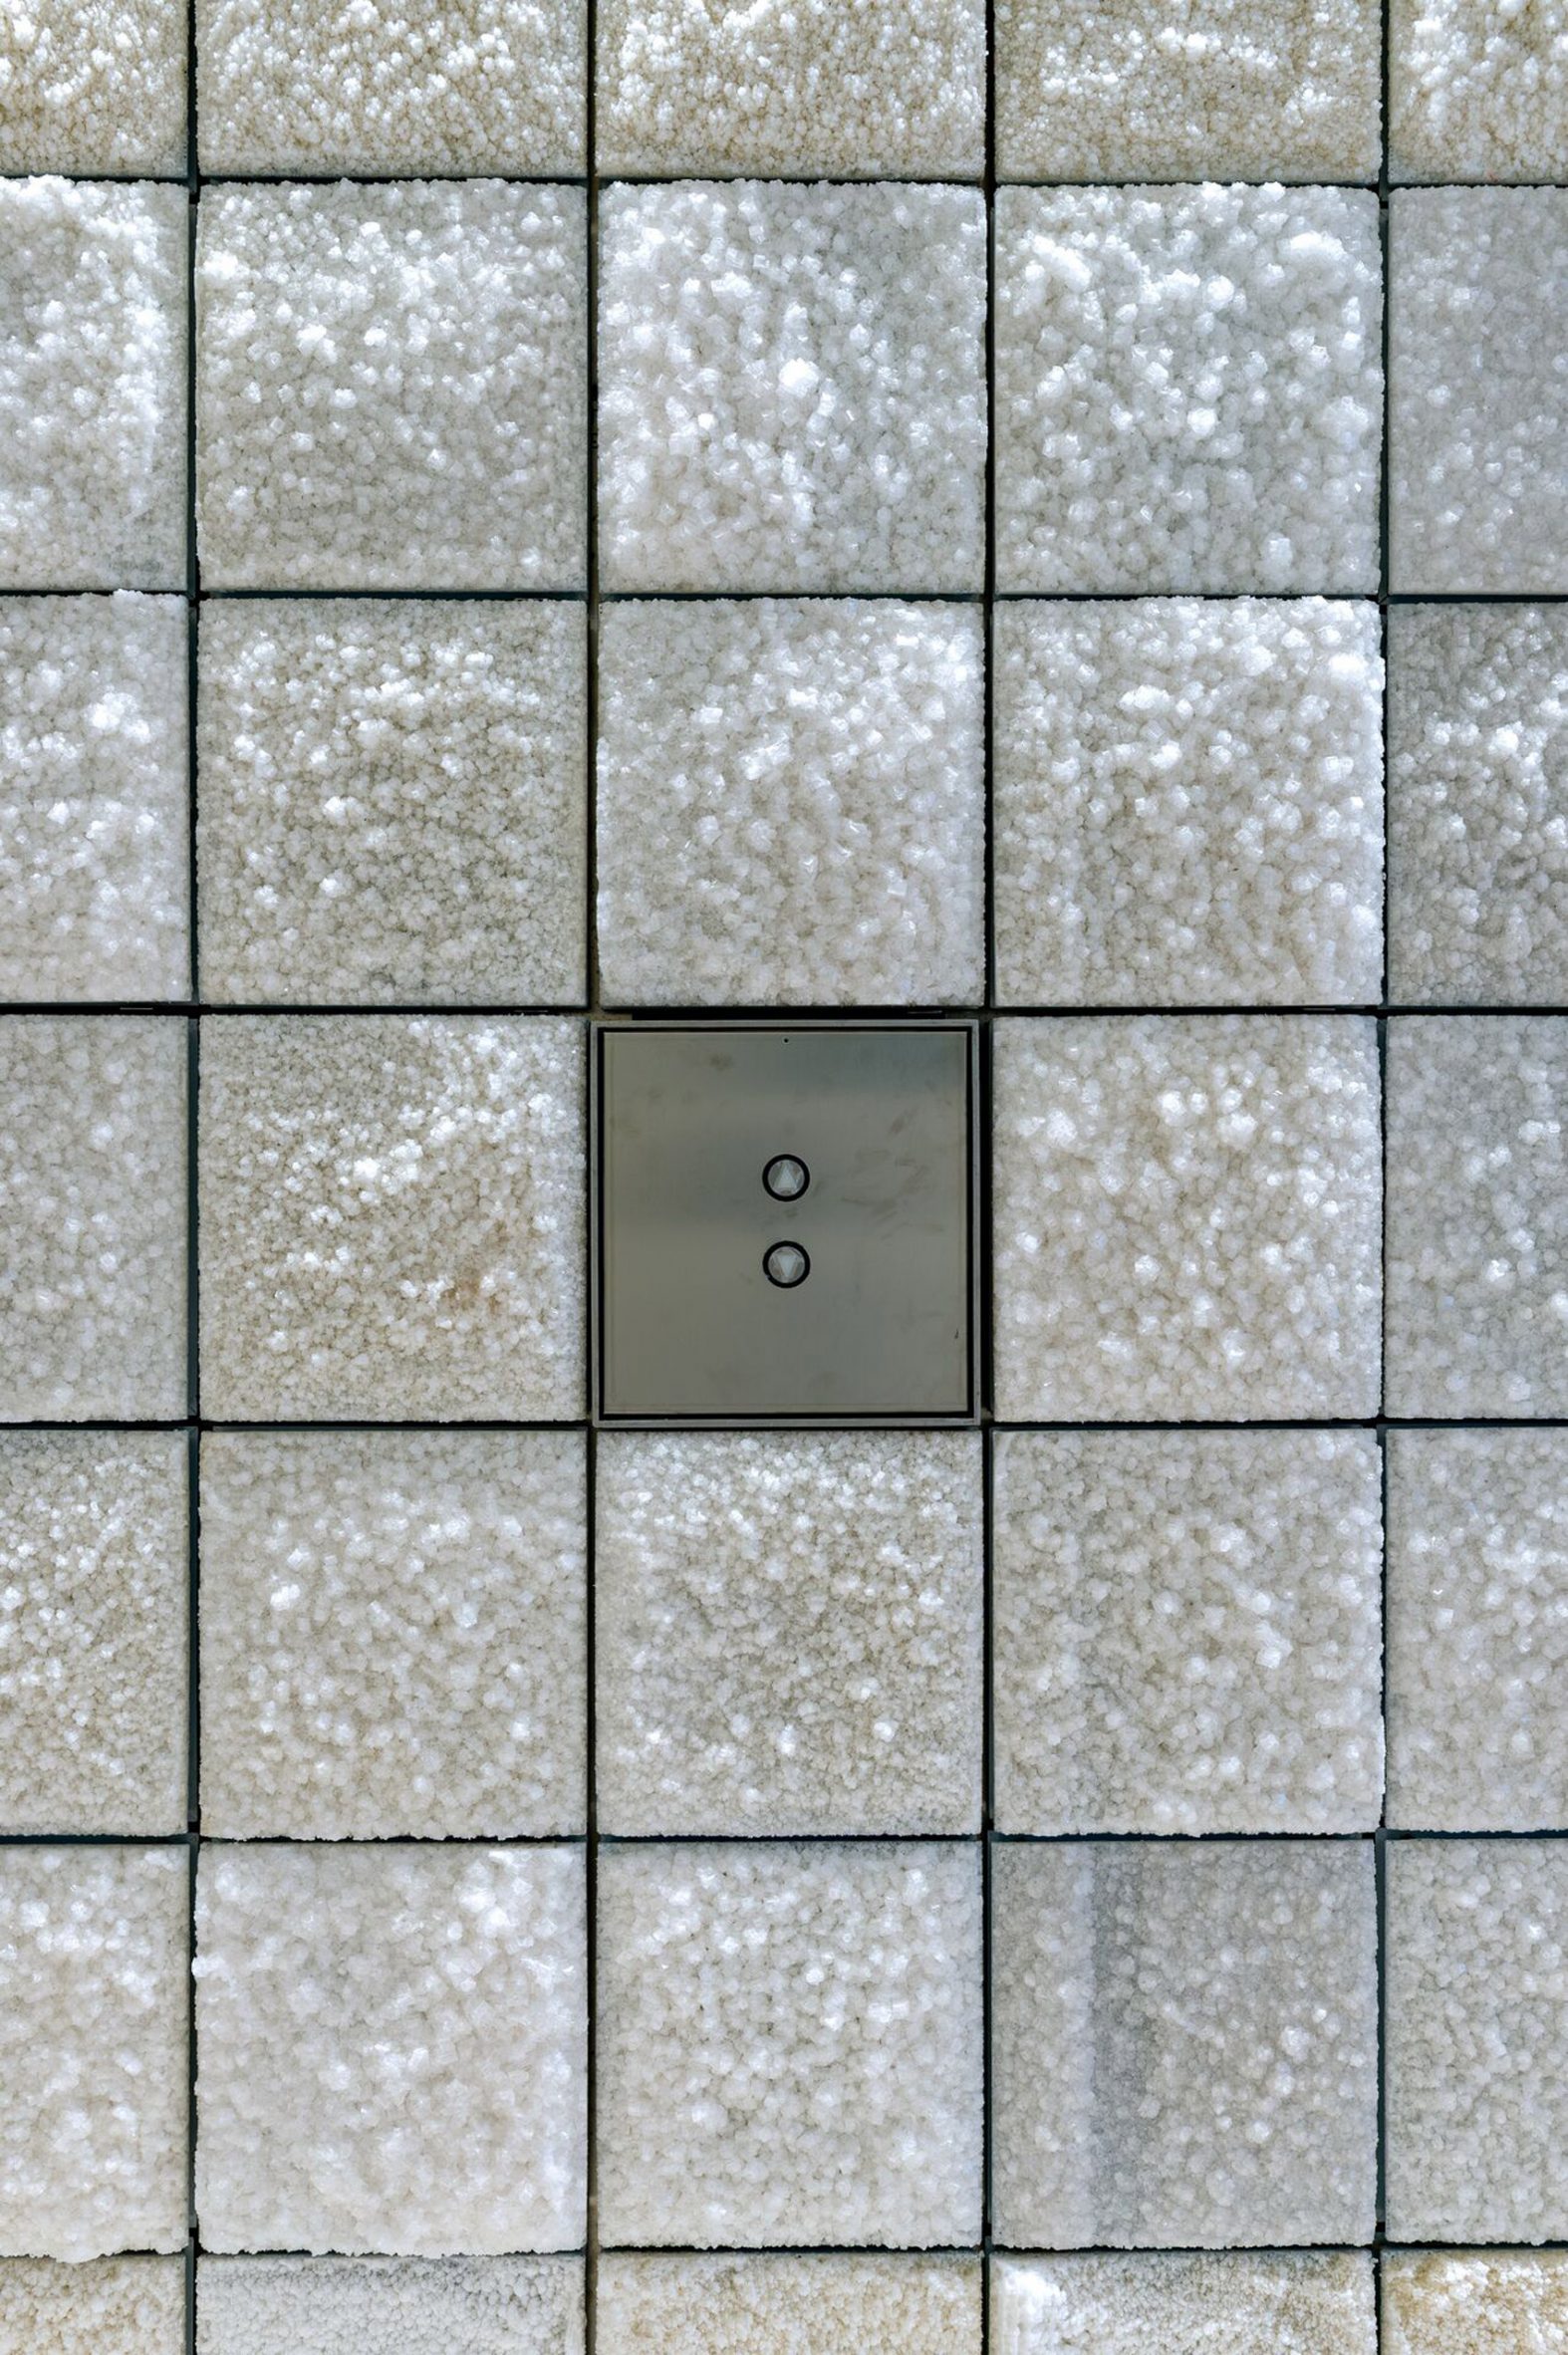 Salt crystal wall panels